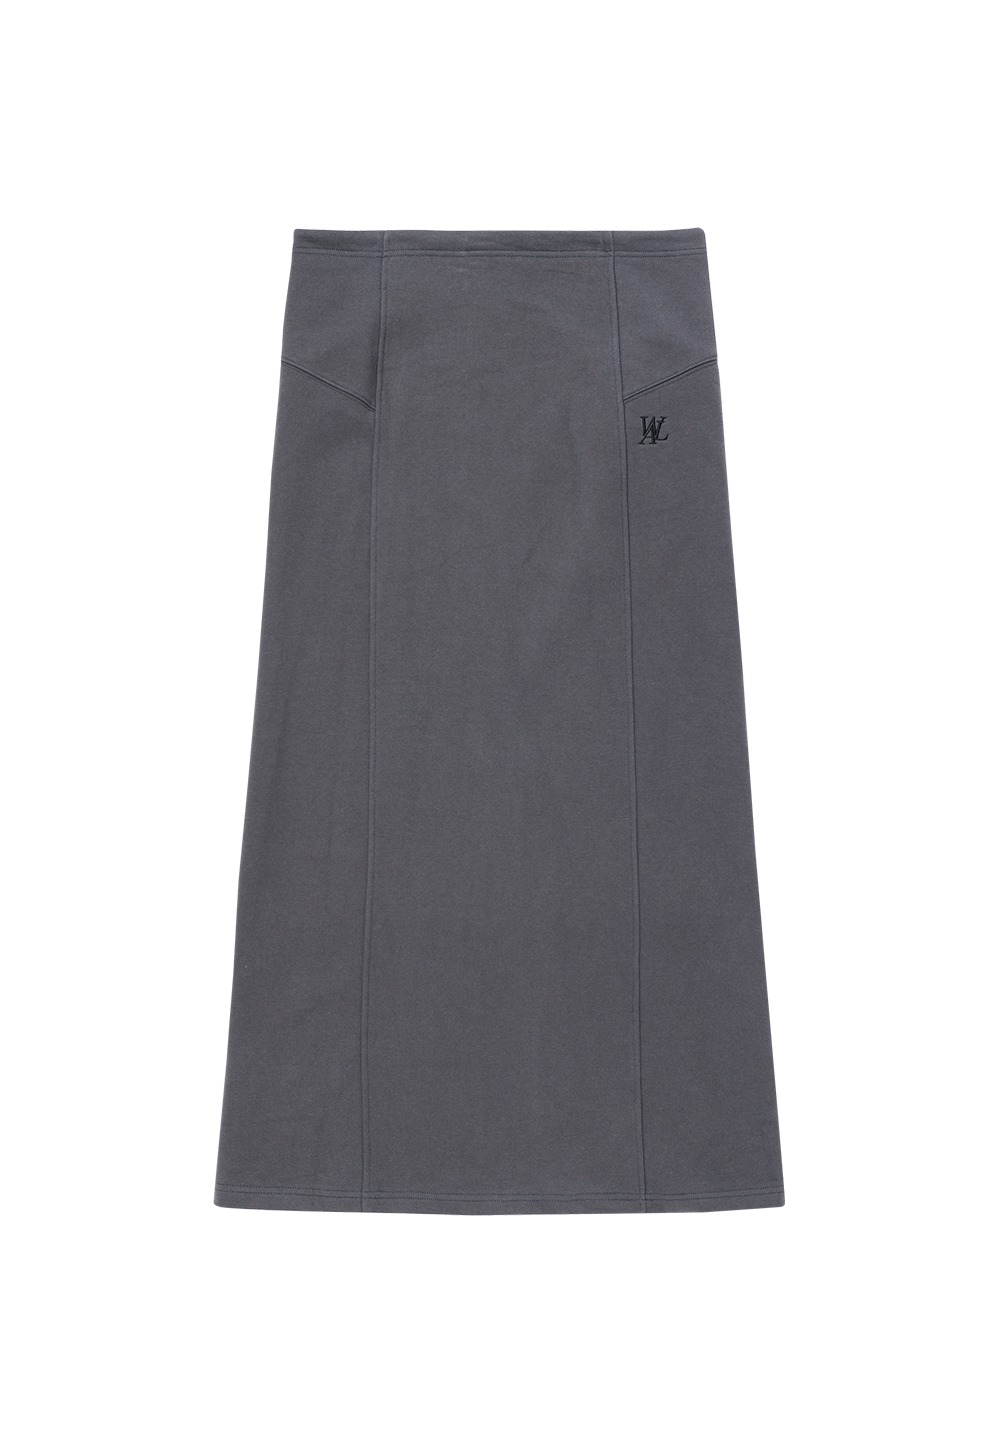 Signature slim long skirt - CHARCOAL GREY